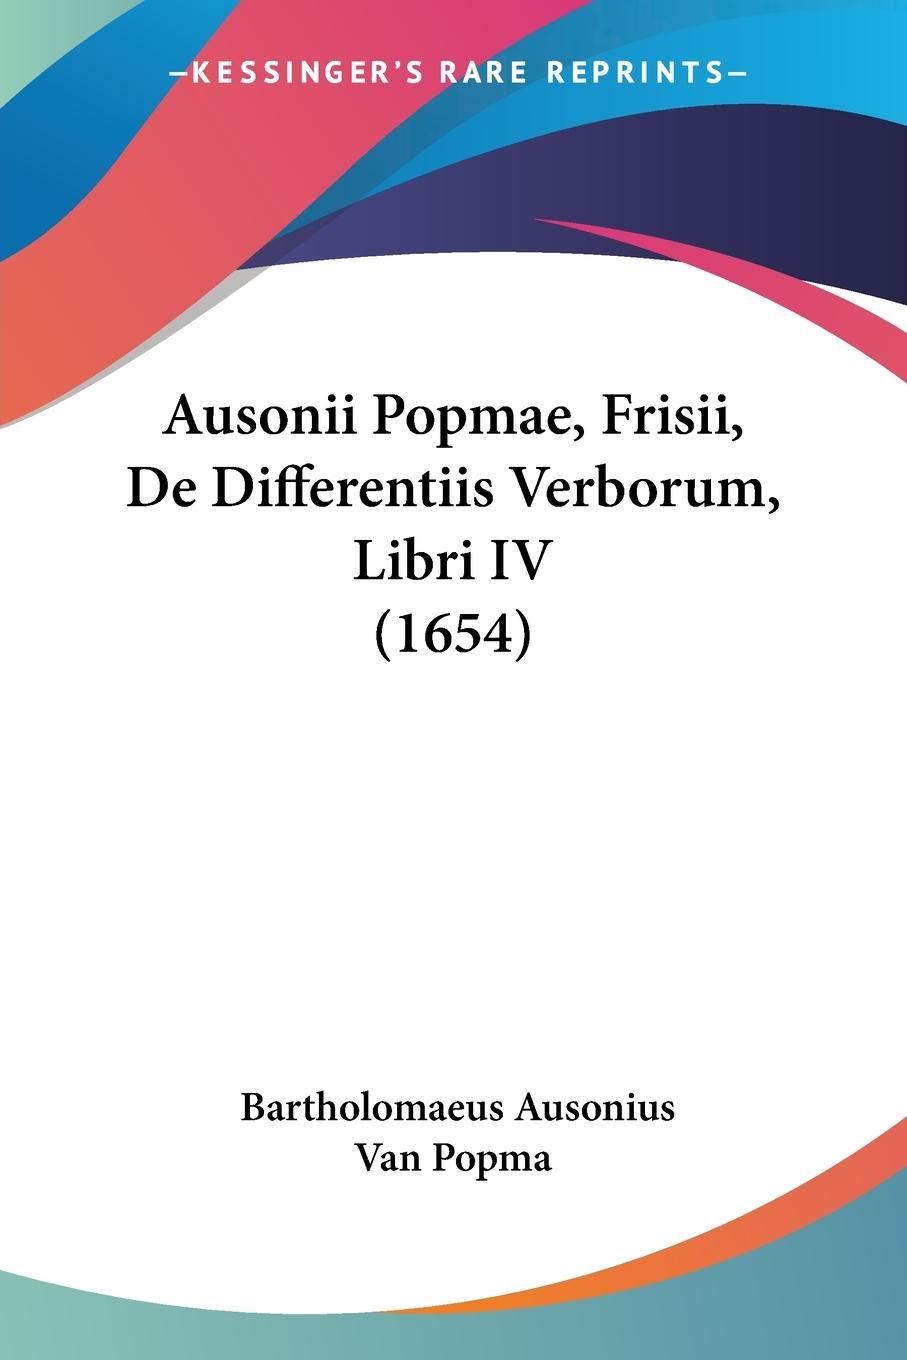 Ausonii Popmae, Frisii, De Differentiis Verborum, Libri IV (1654) - Ausonius Van Popma, Bartholomaeus